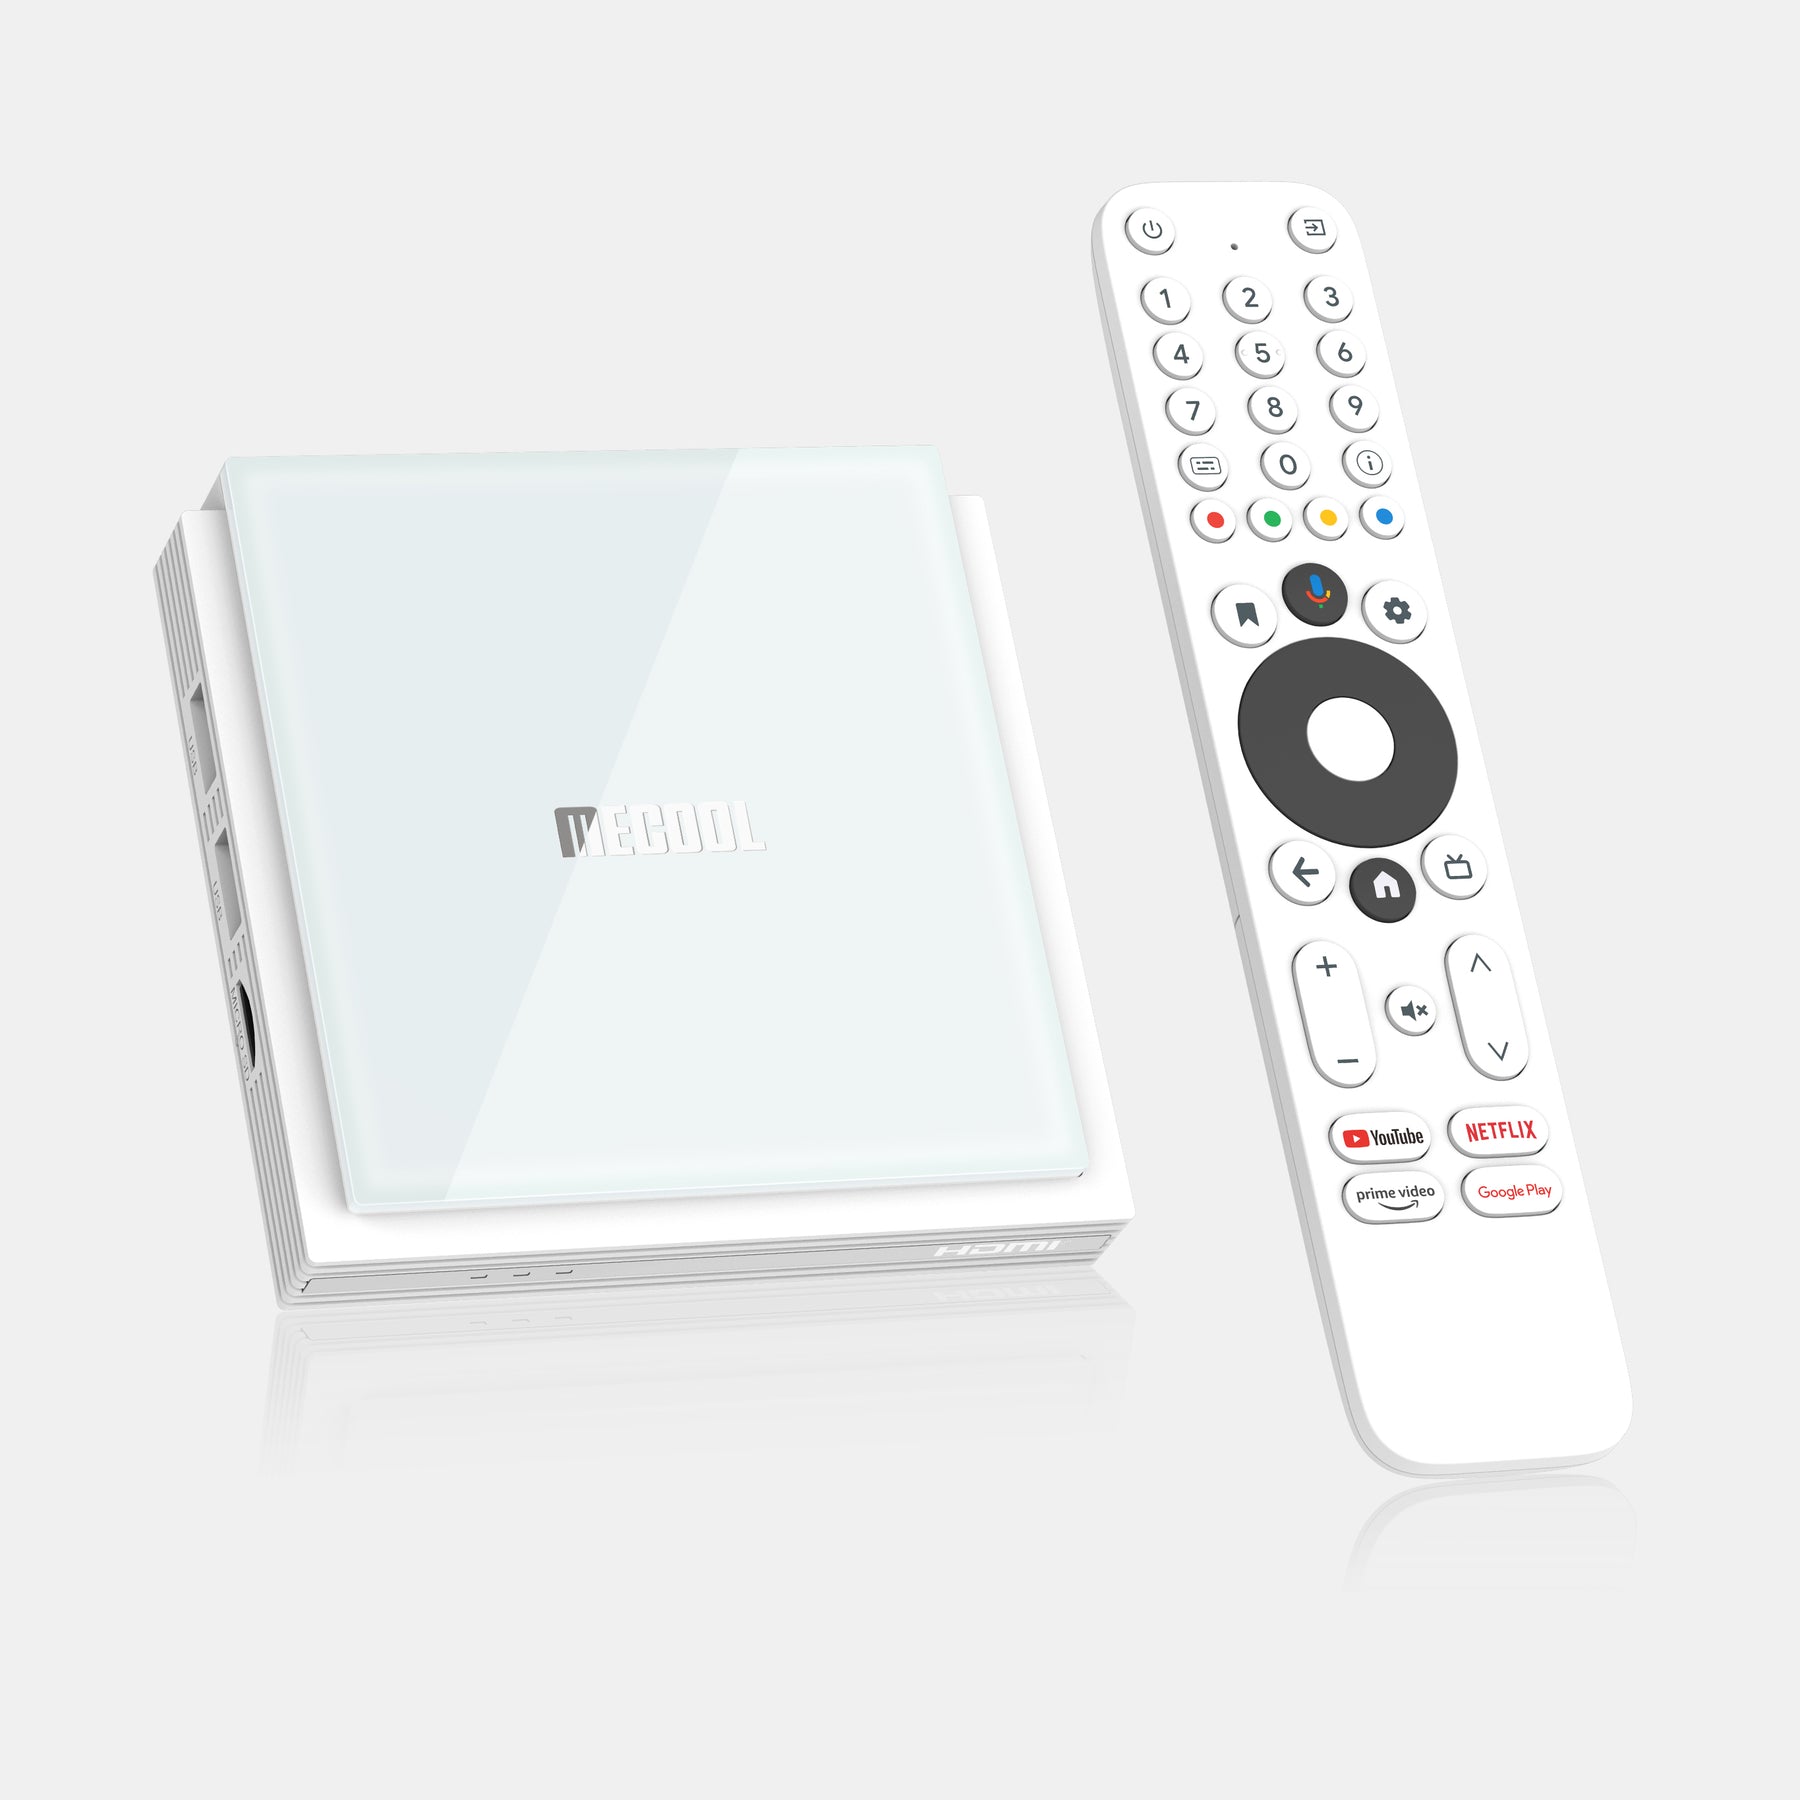 Global Mecool KM2 Netflix españa 4K TV Box Android 10 ATV Google